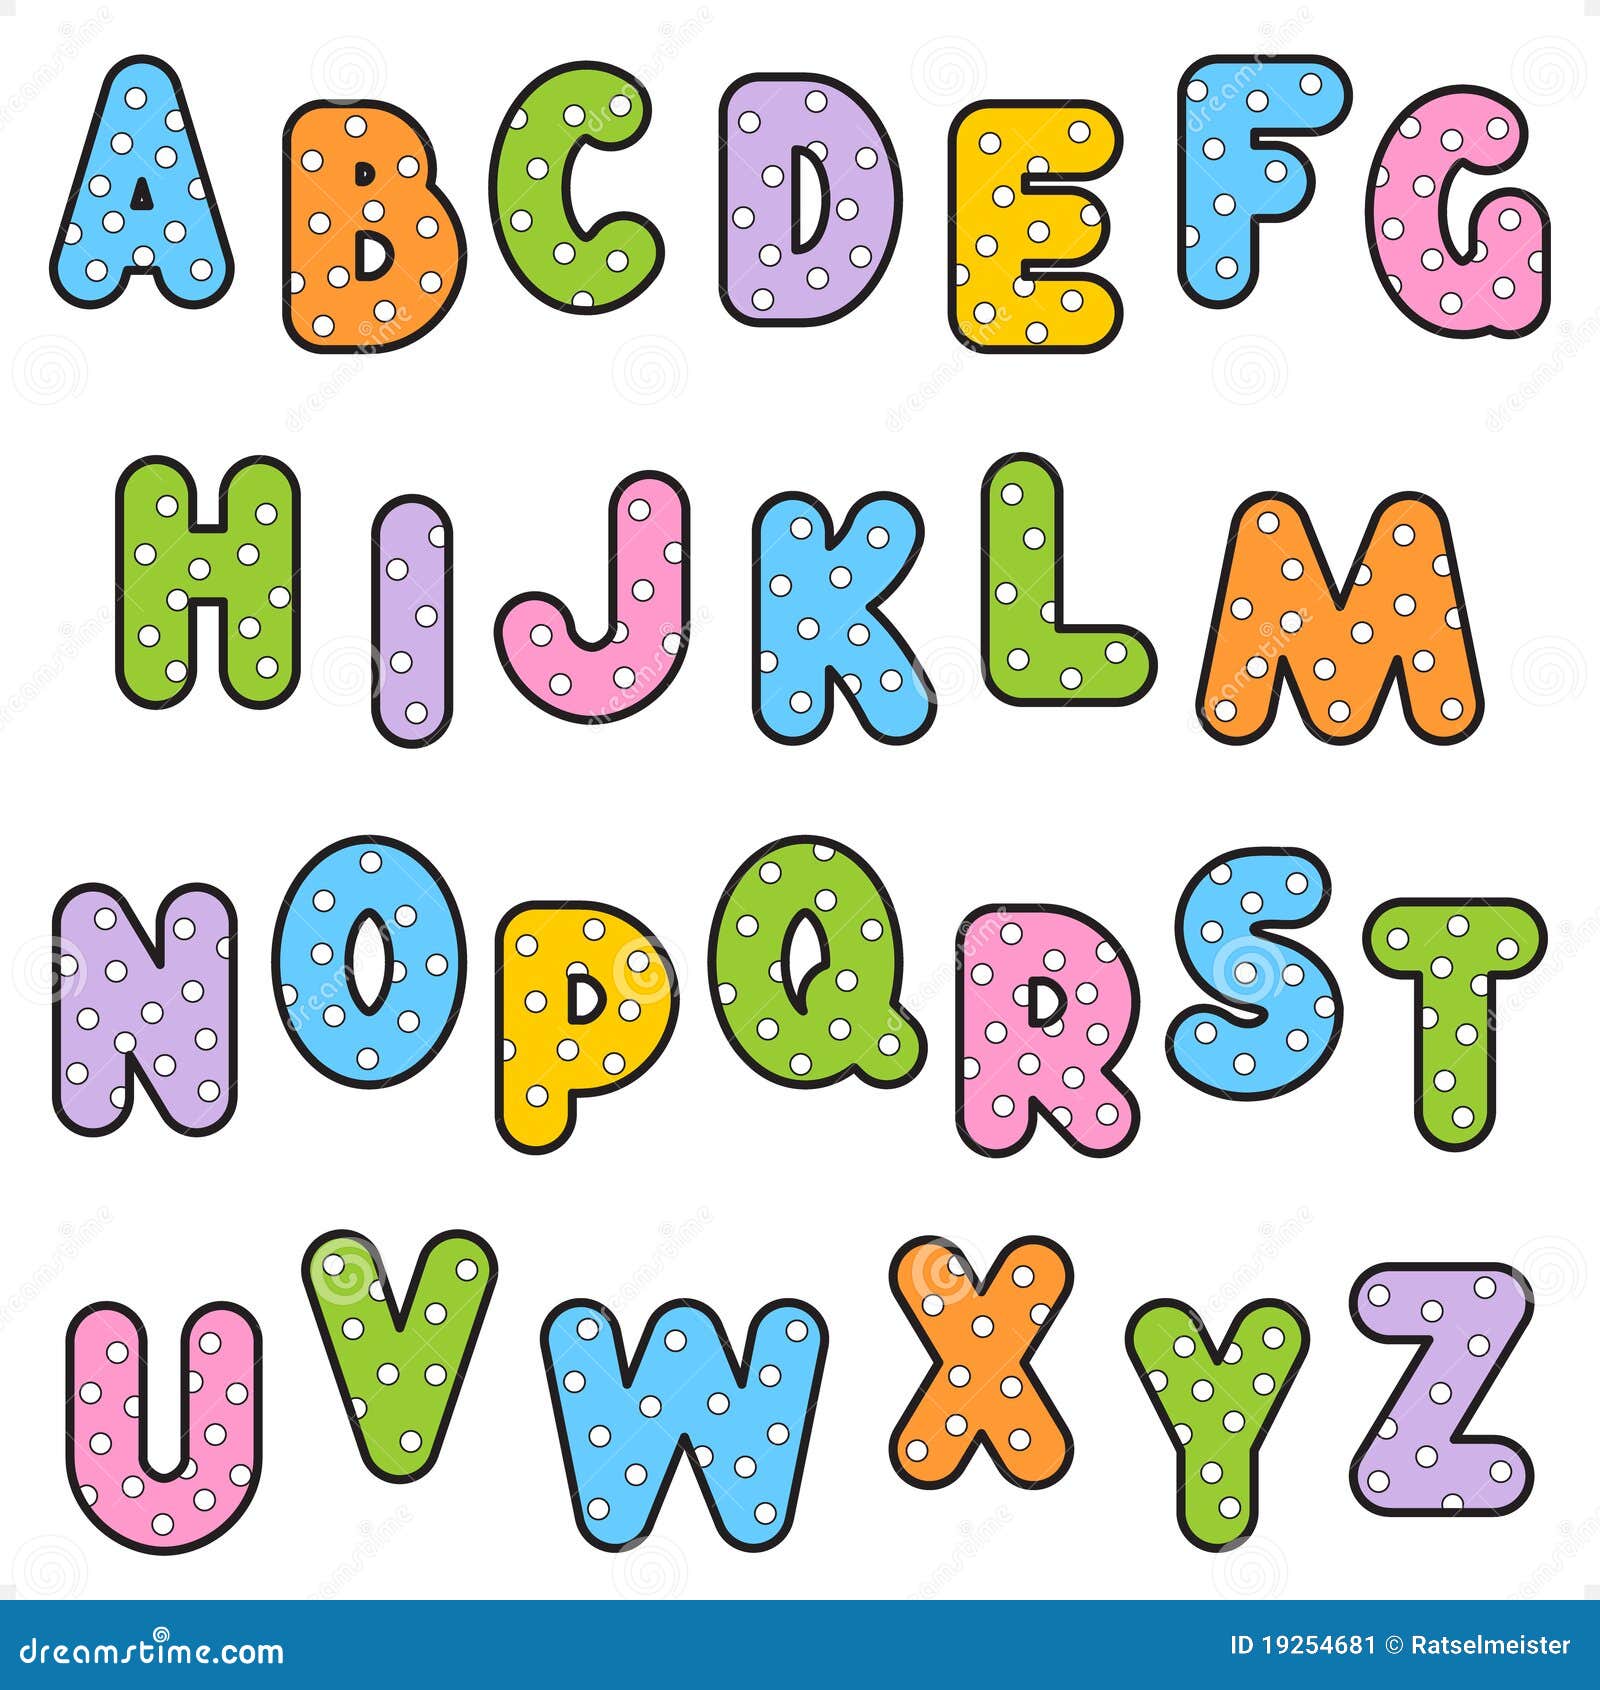 Polka-dot Pattern Alphabet Set Stock Image - Image: 19254681